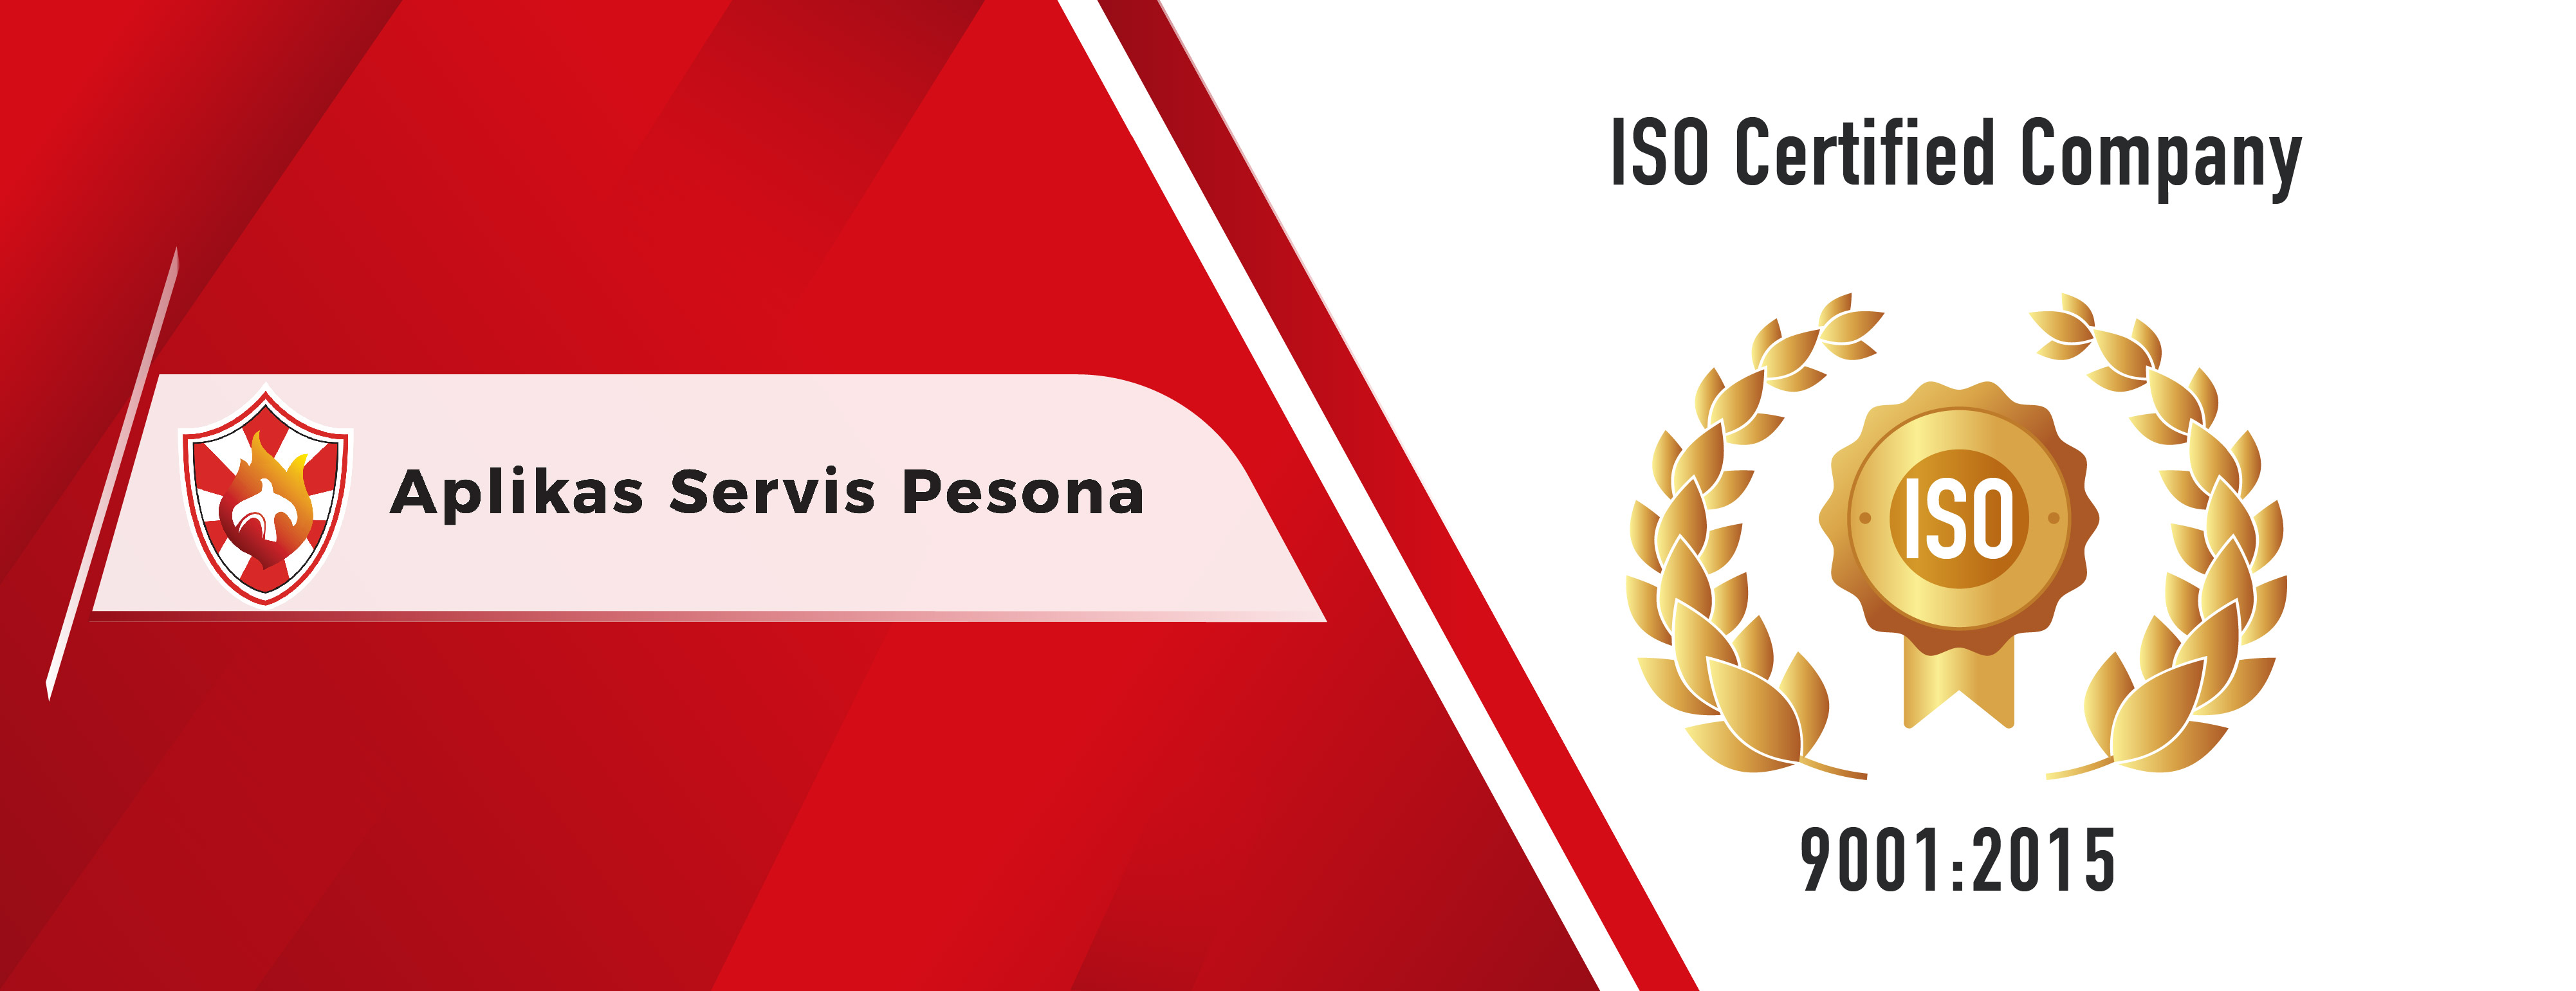 Aplikas Servis Pesona Obtains ISO 9001:2015 Certification